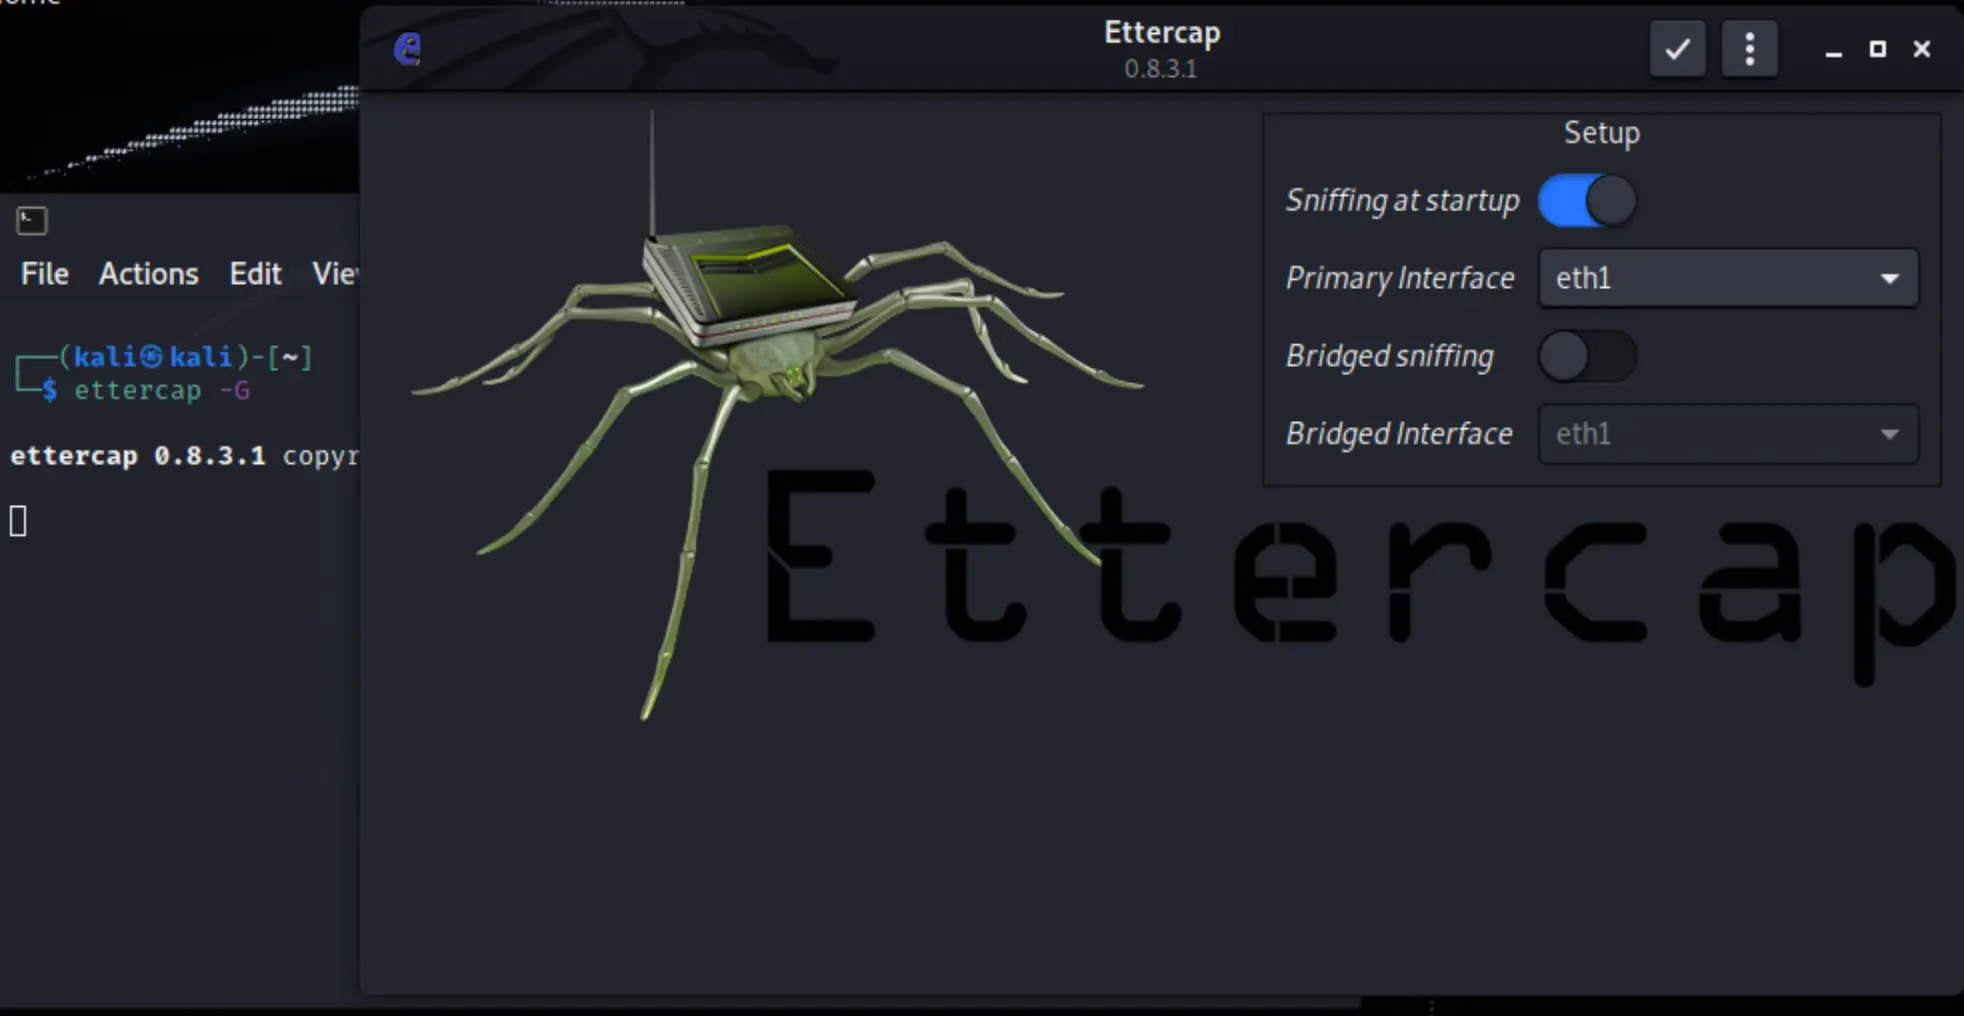 Ettercap Select Network